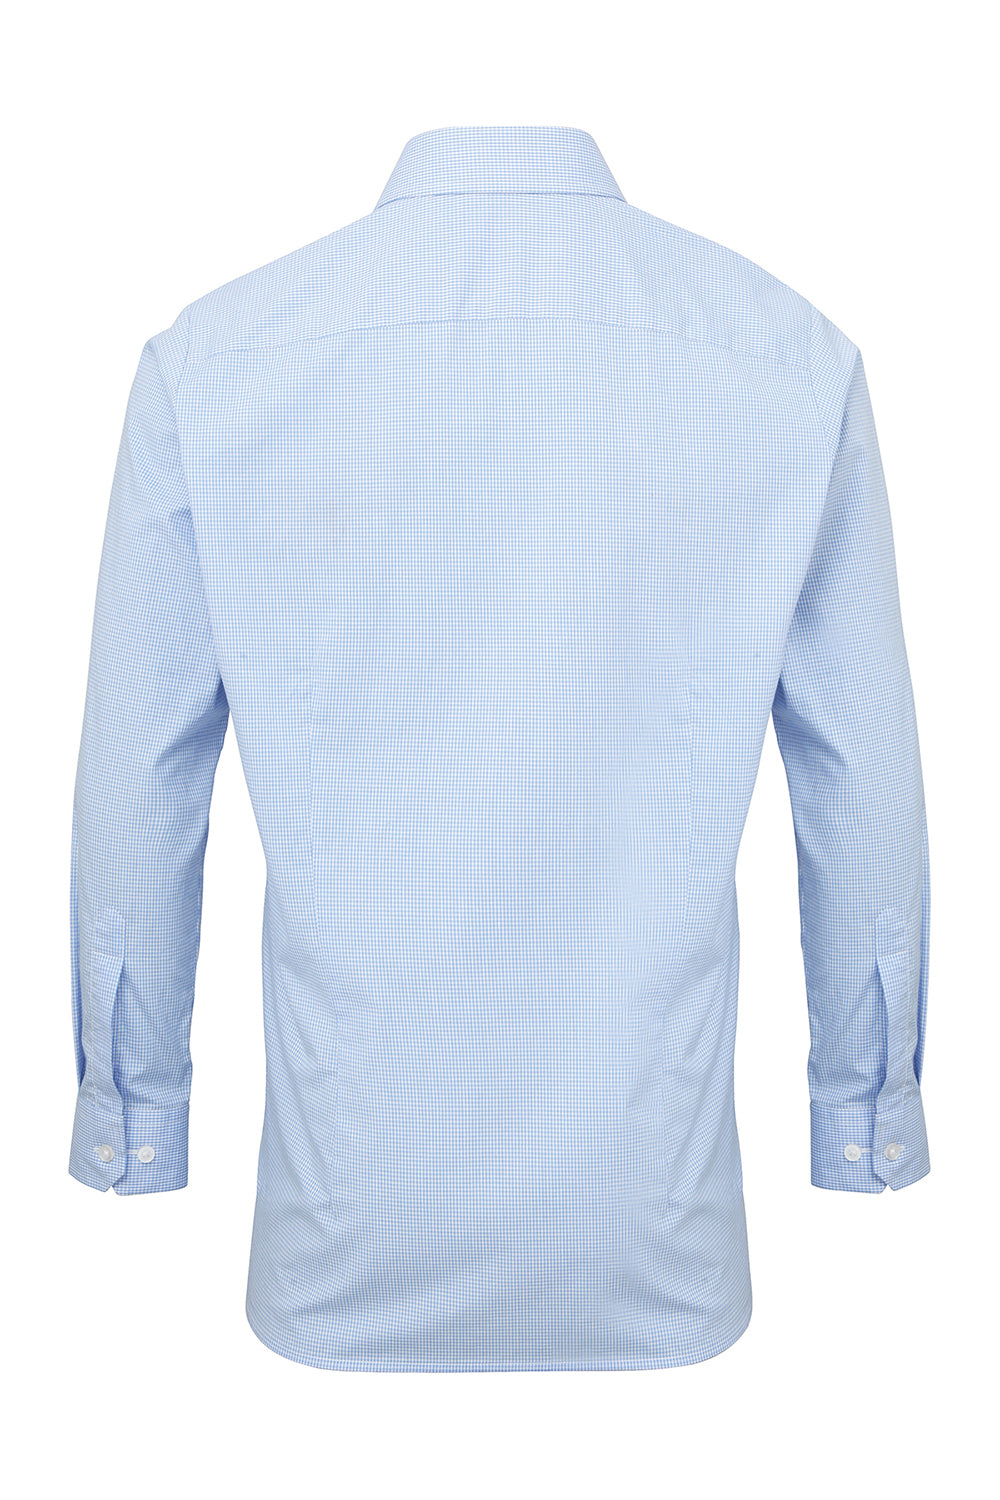 Artisan Collection RP220 Mens Microcheck Gingham Long Sleeve Button Down Shirt Light Blue/White Model Flat Back